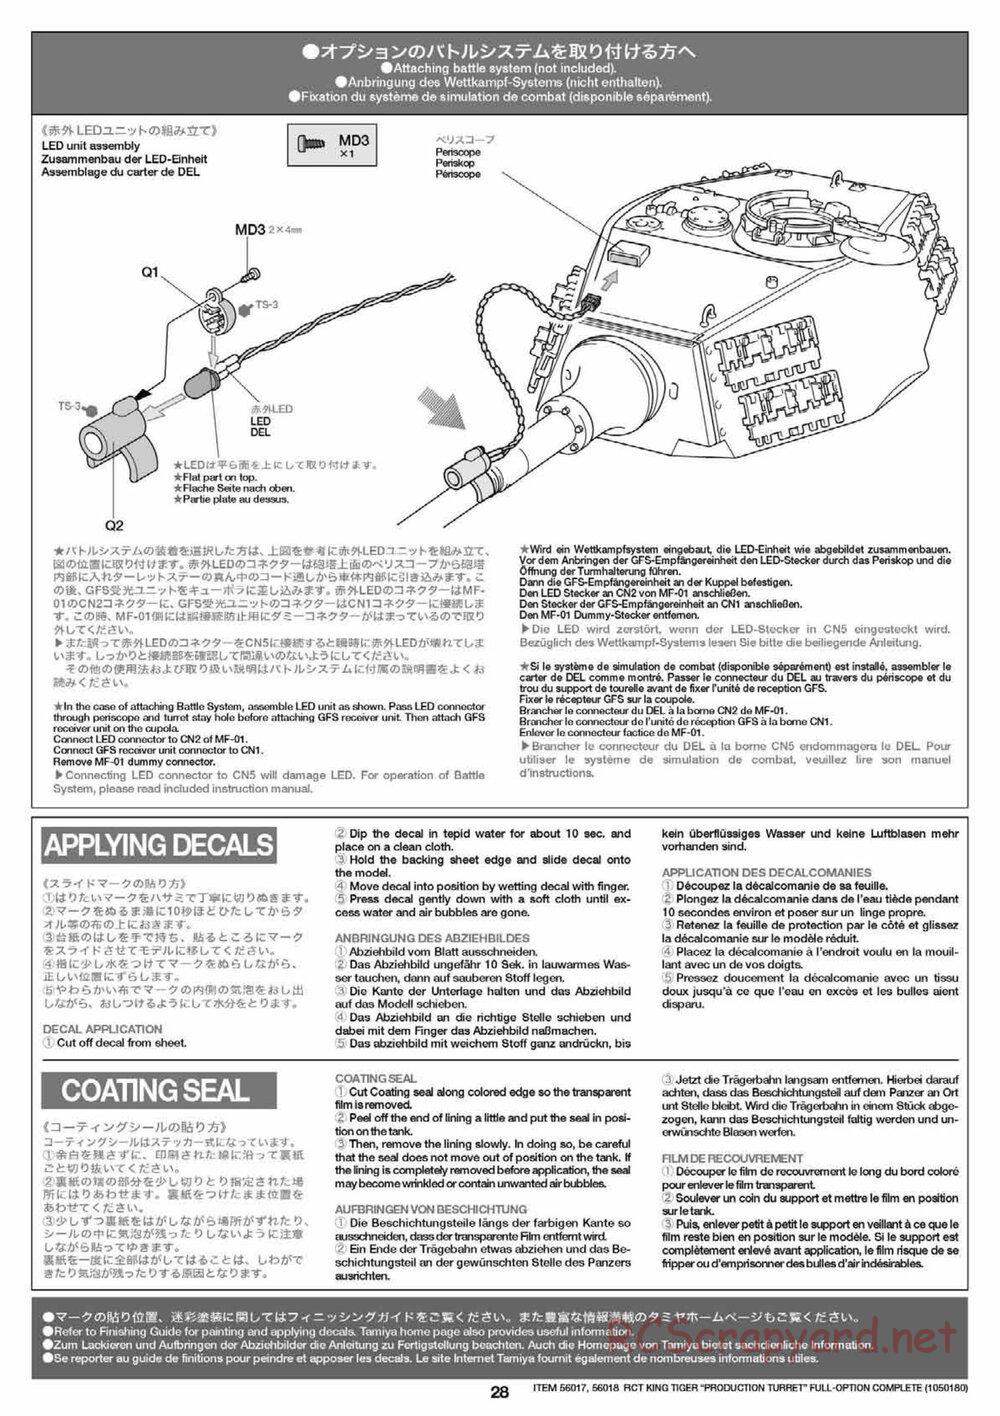 Tamiya - King Tiger - 1/16 Scale Chassis - Manual - Page 28